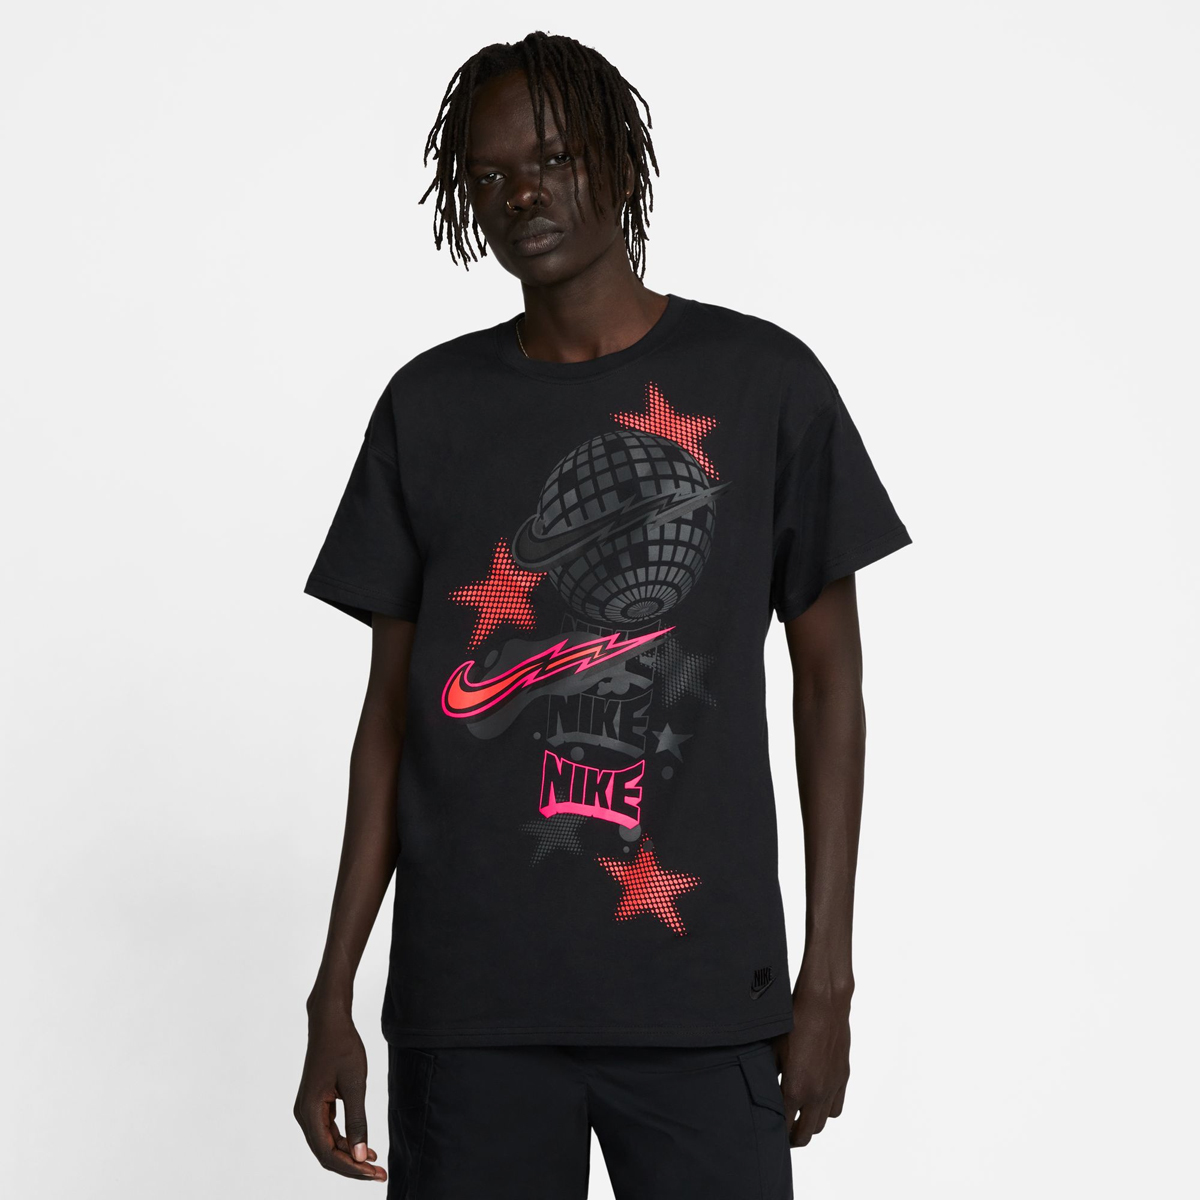 Nike-Electric-High-T-Shirt-Black-Red-Pink-1